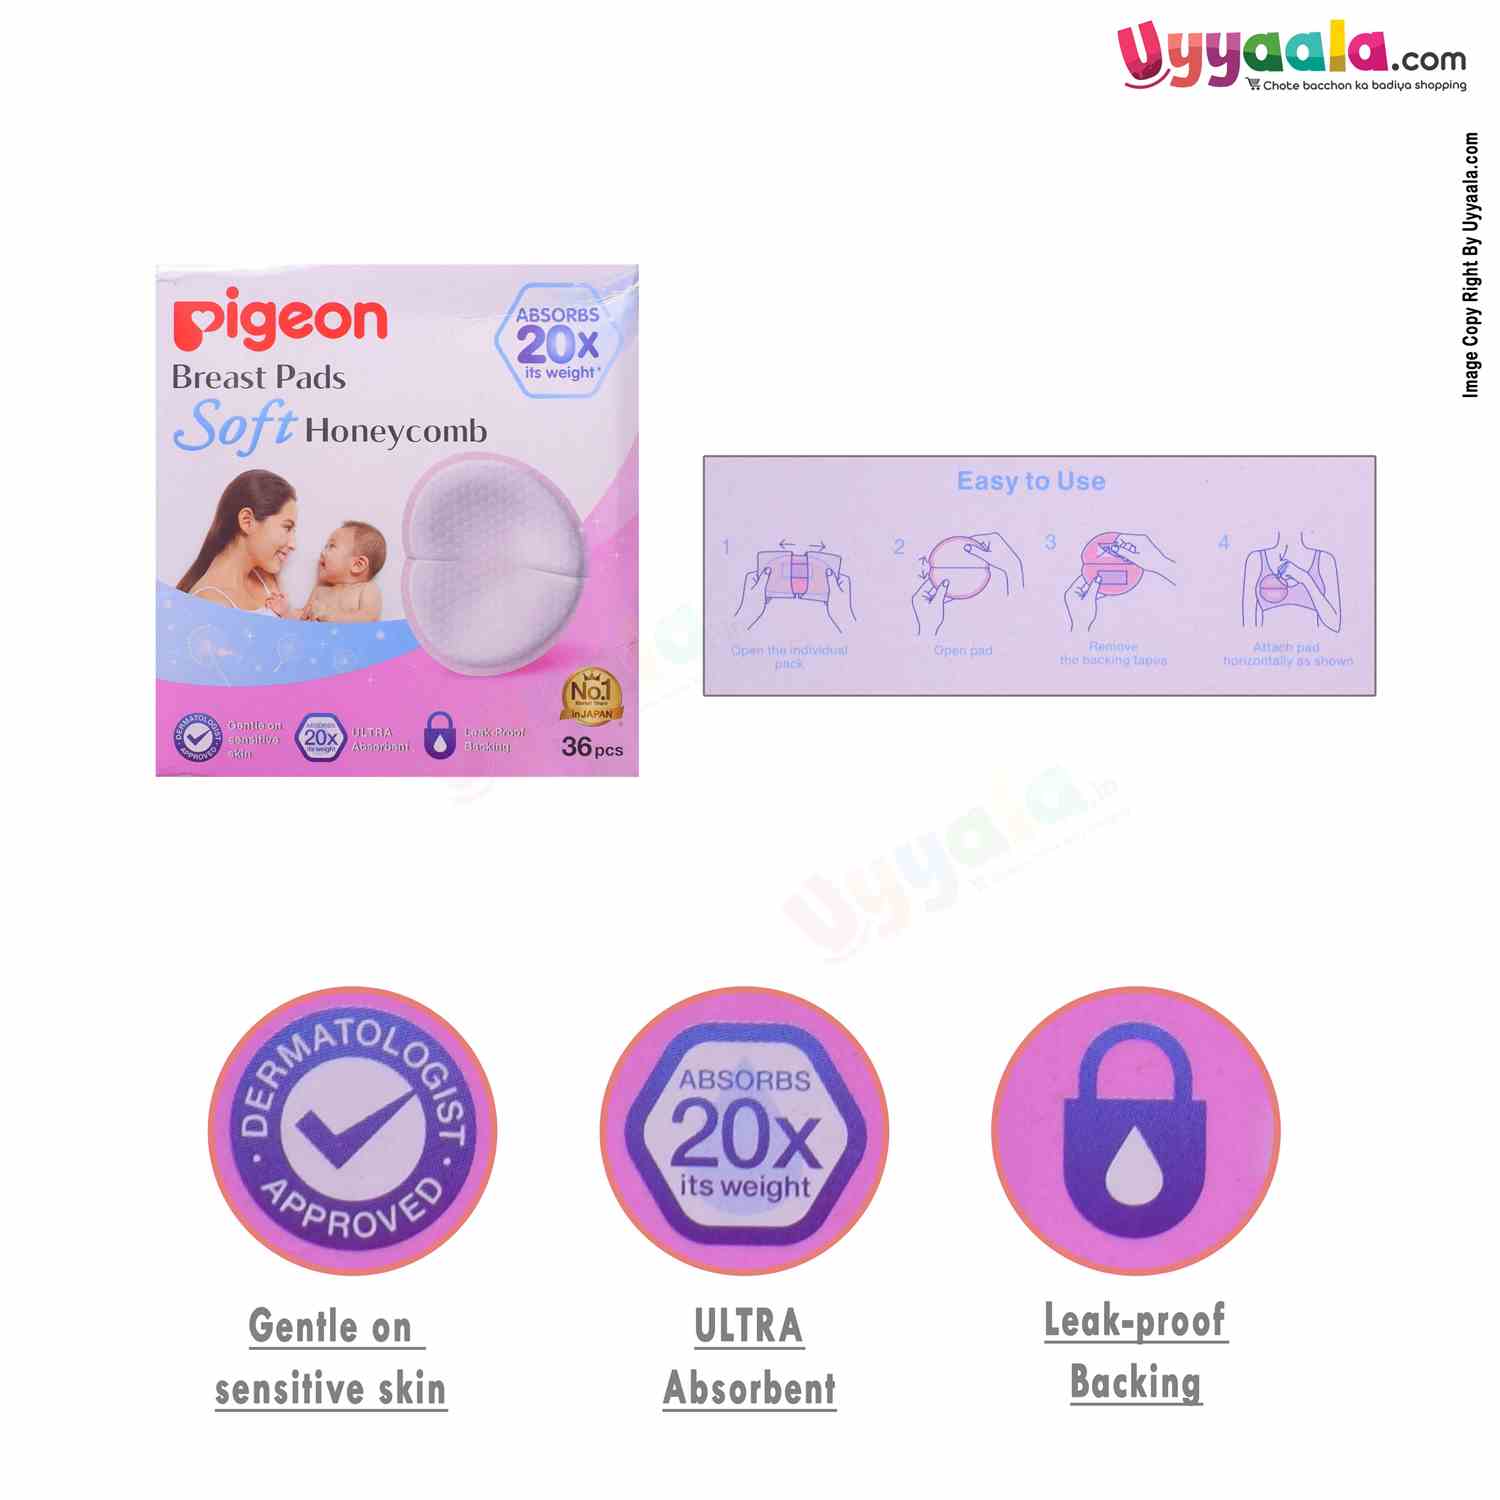 PIGEON Disposable Breast (Nursing) Pads Soft Honey Comb - 36pcs